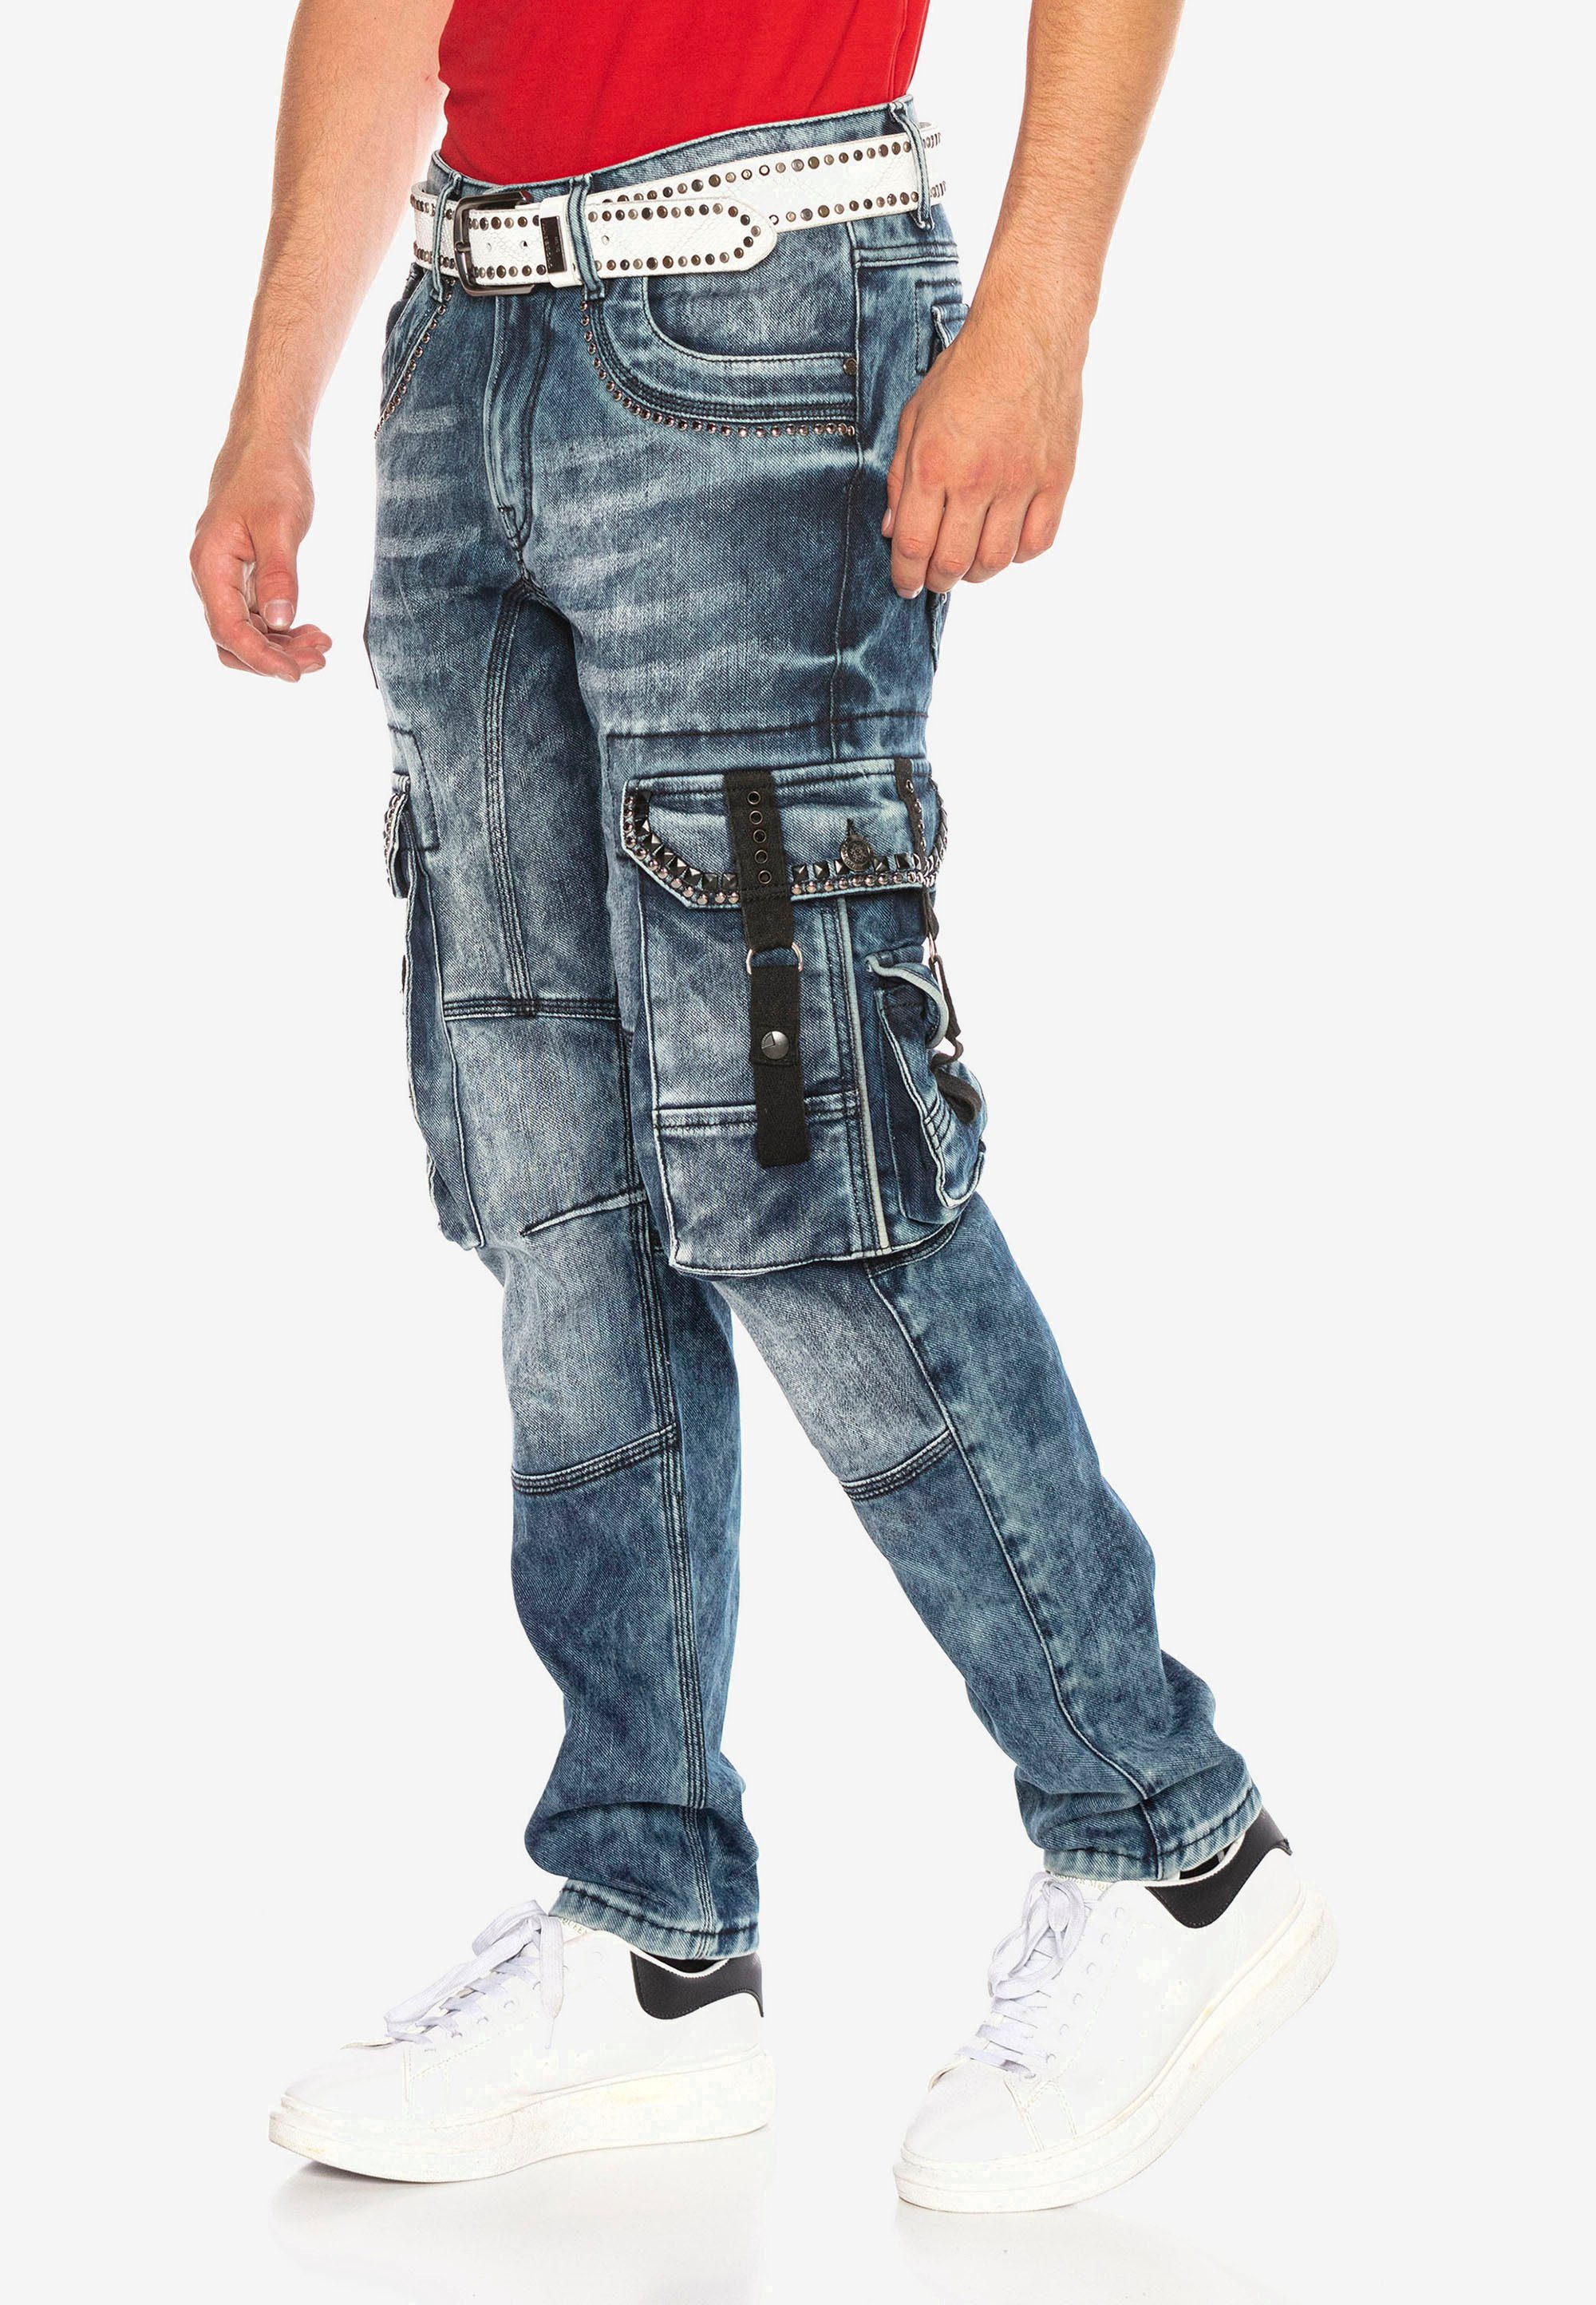 Baxx mit coolen & Cipo Bequeme Jeans Cargotaschen